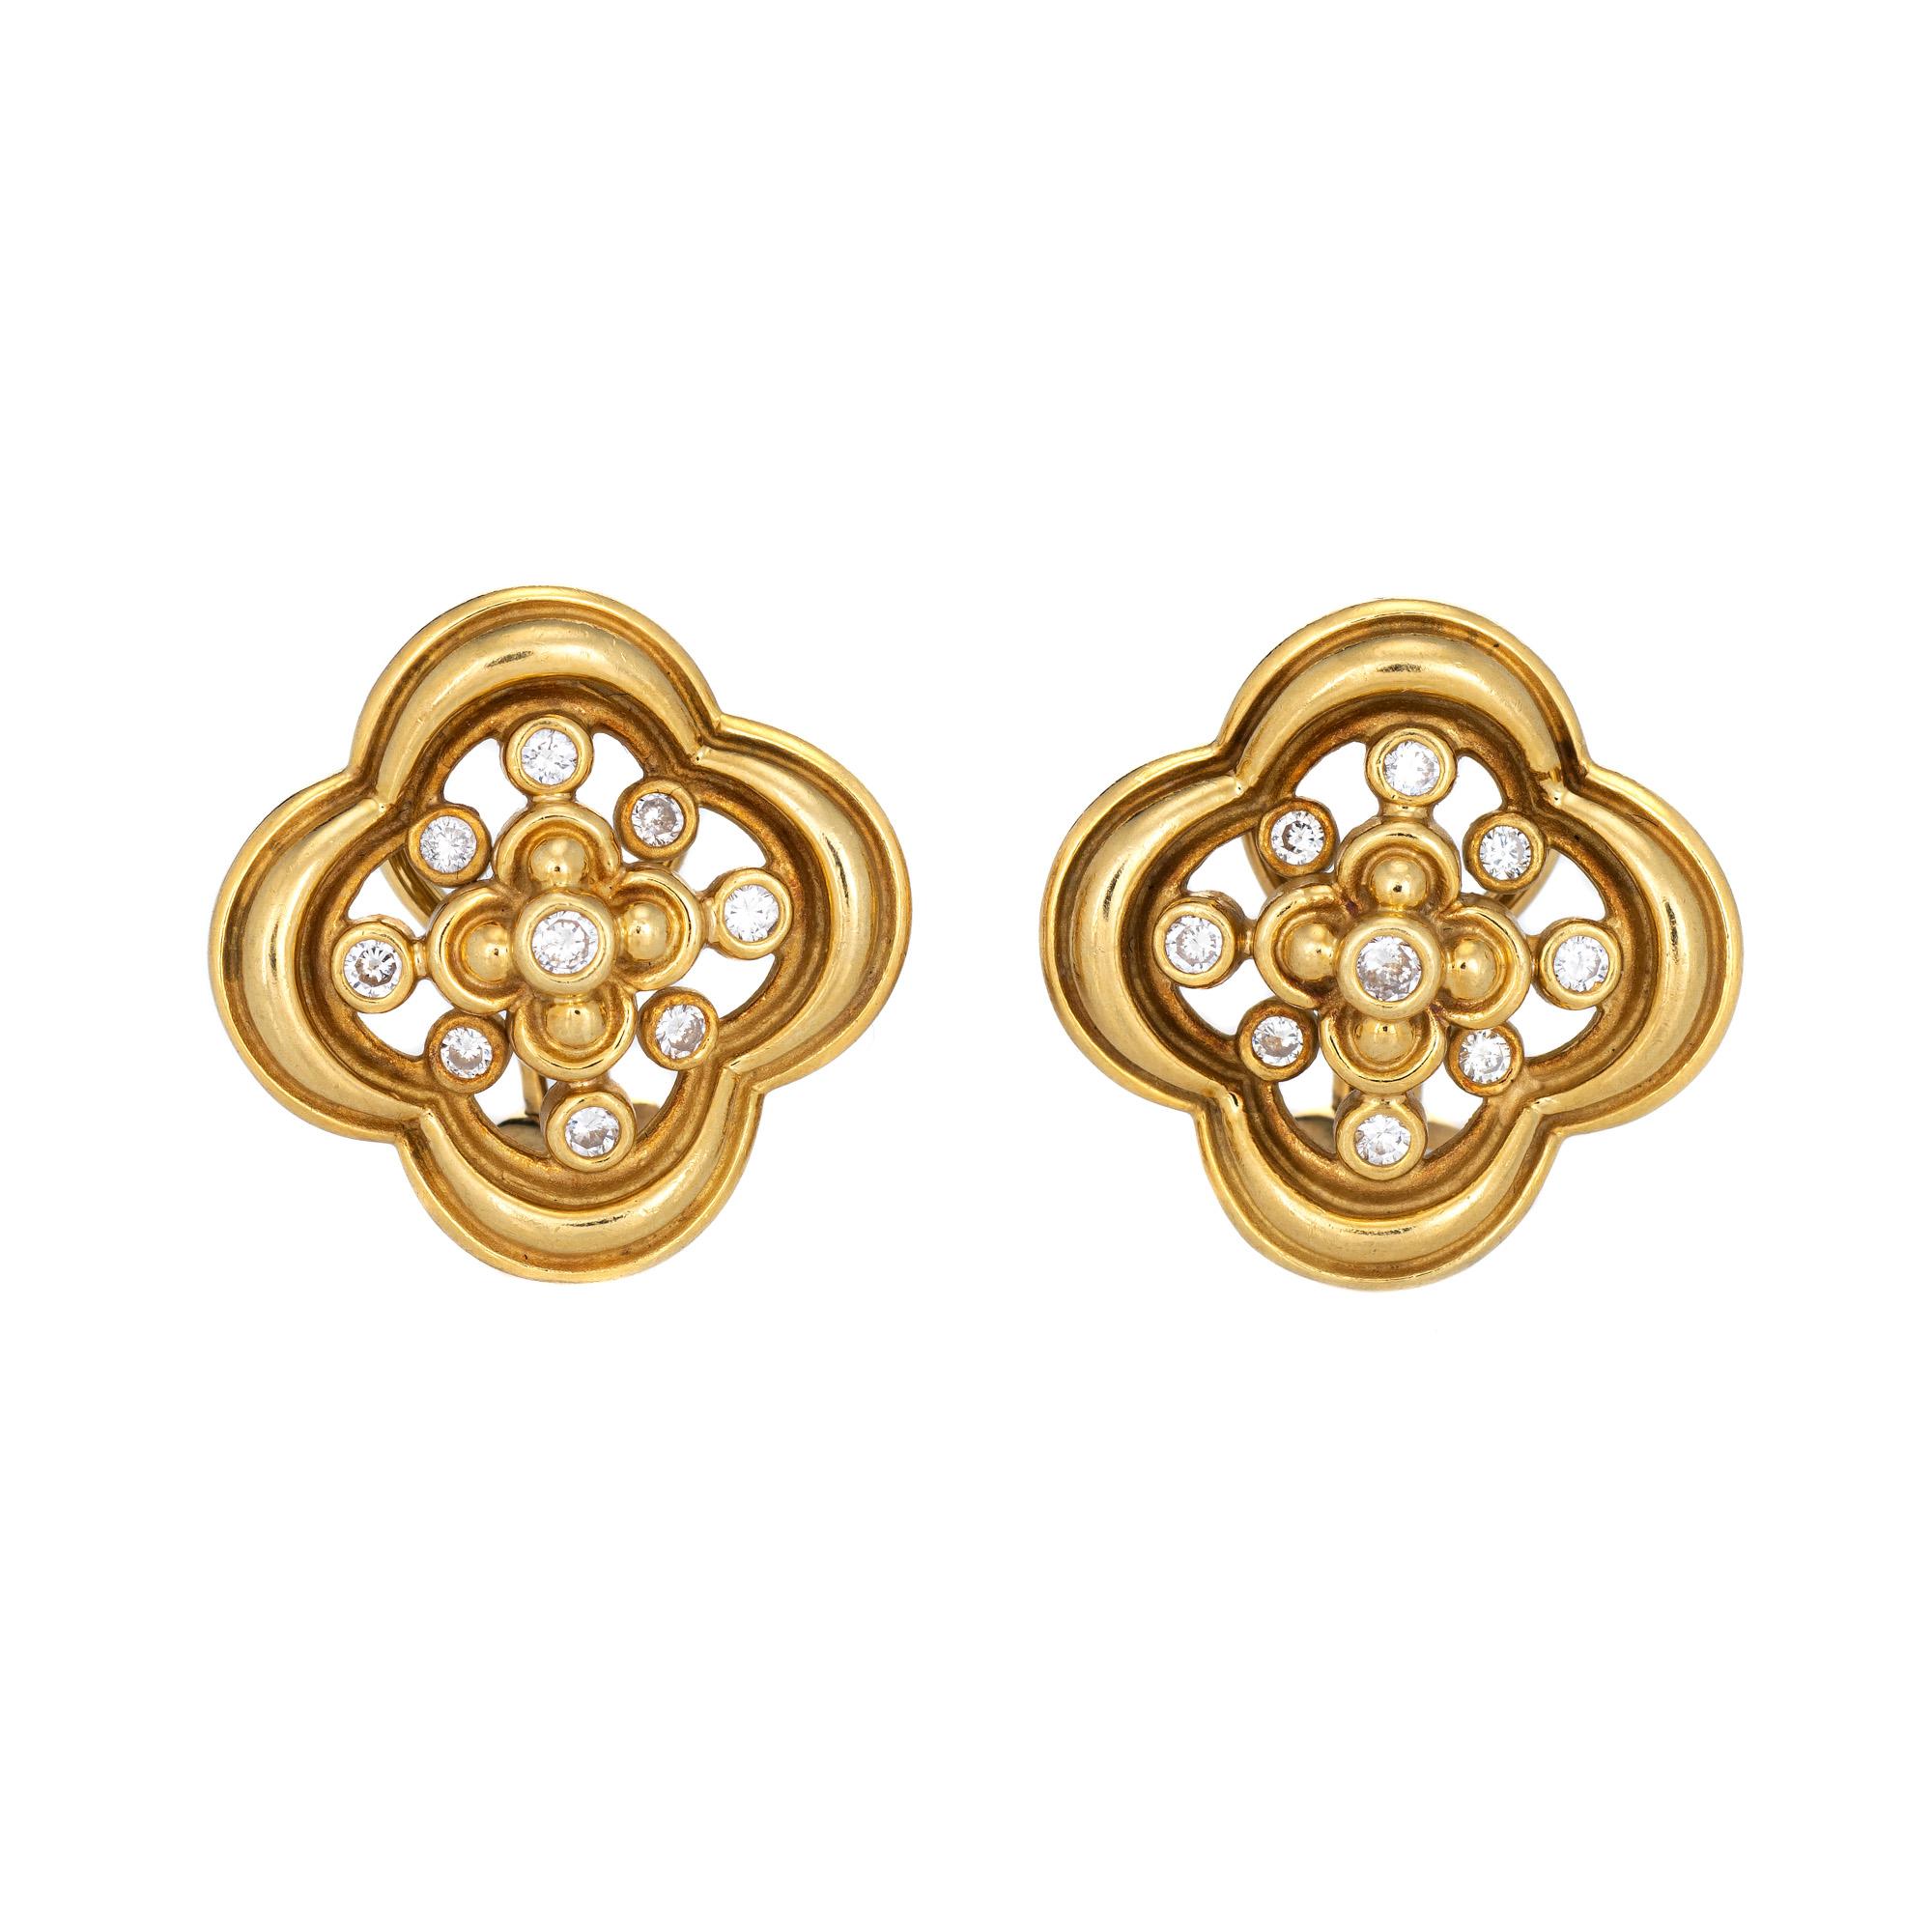 Round Cut Jose Hess Diamond Earrings Vintage 18k Yellow Gold Quatrefoil Design Jewelry For Sale